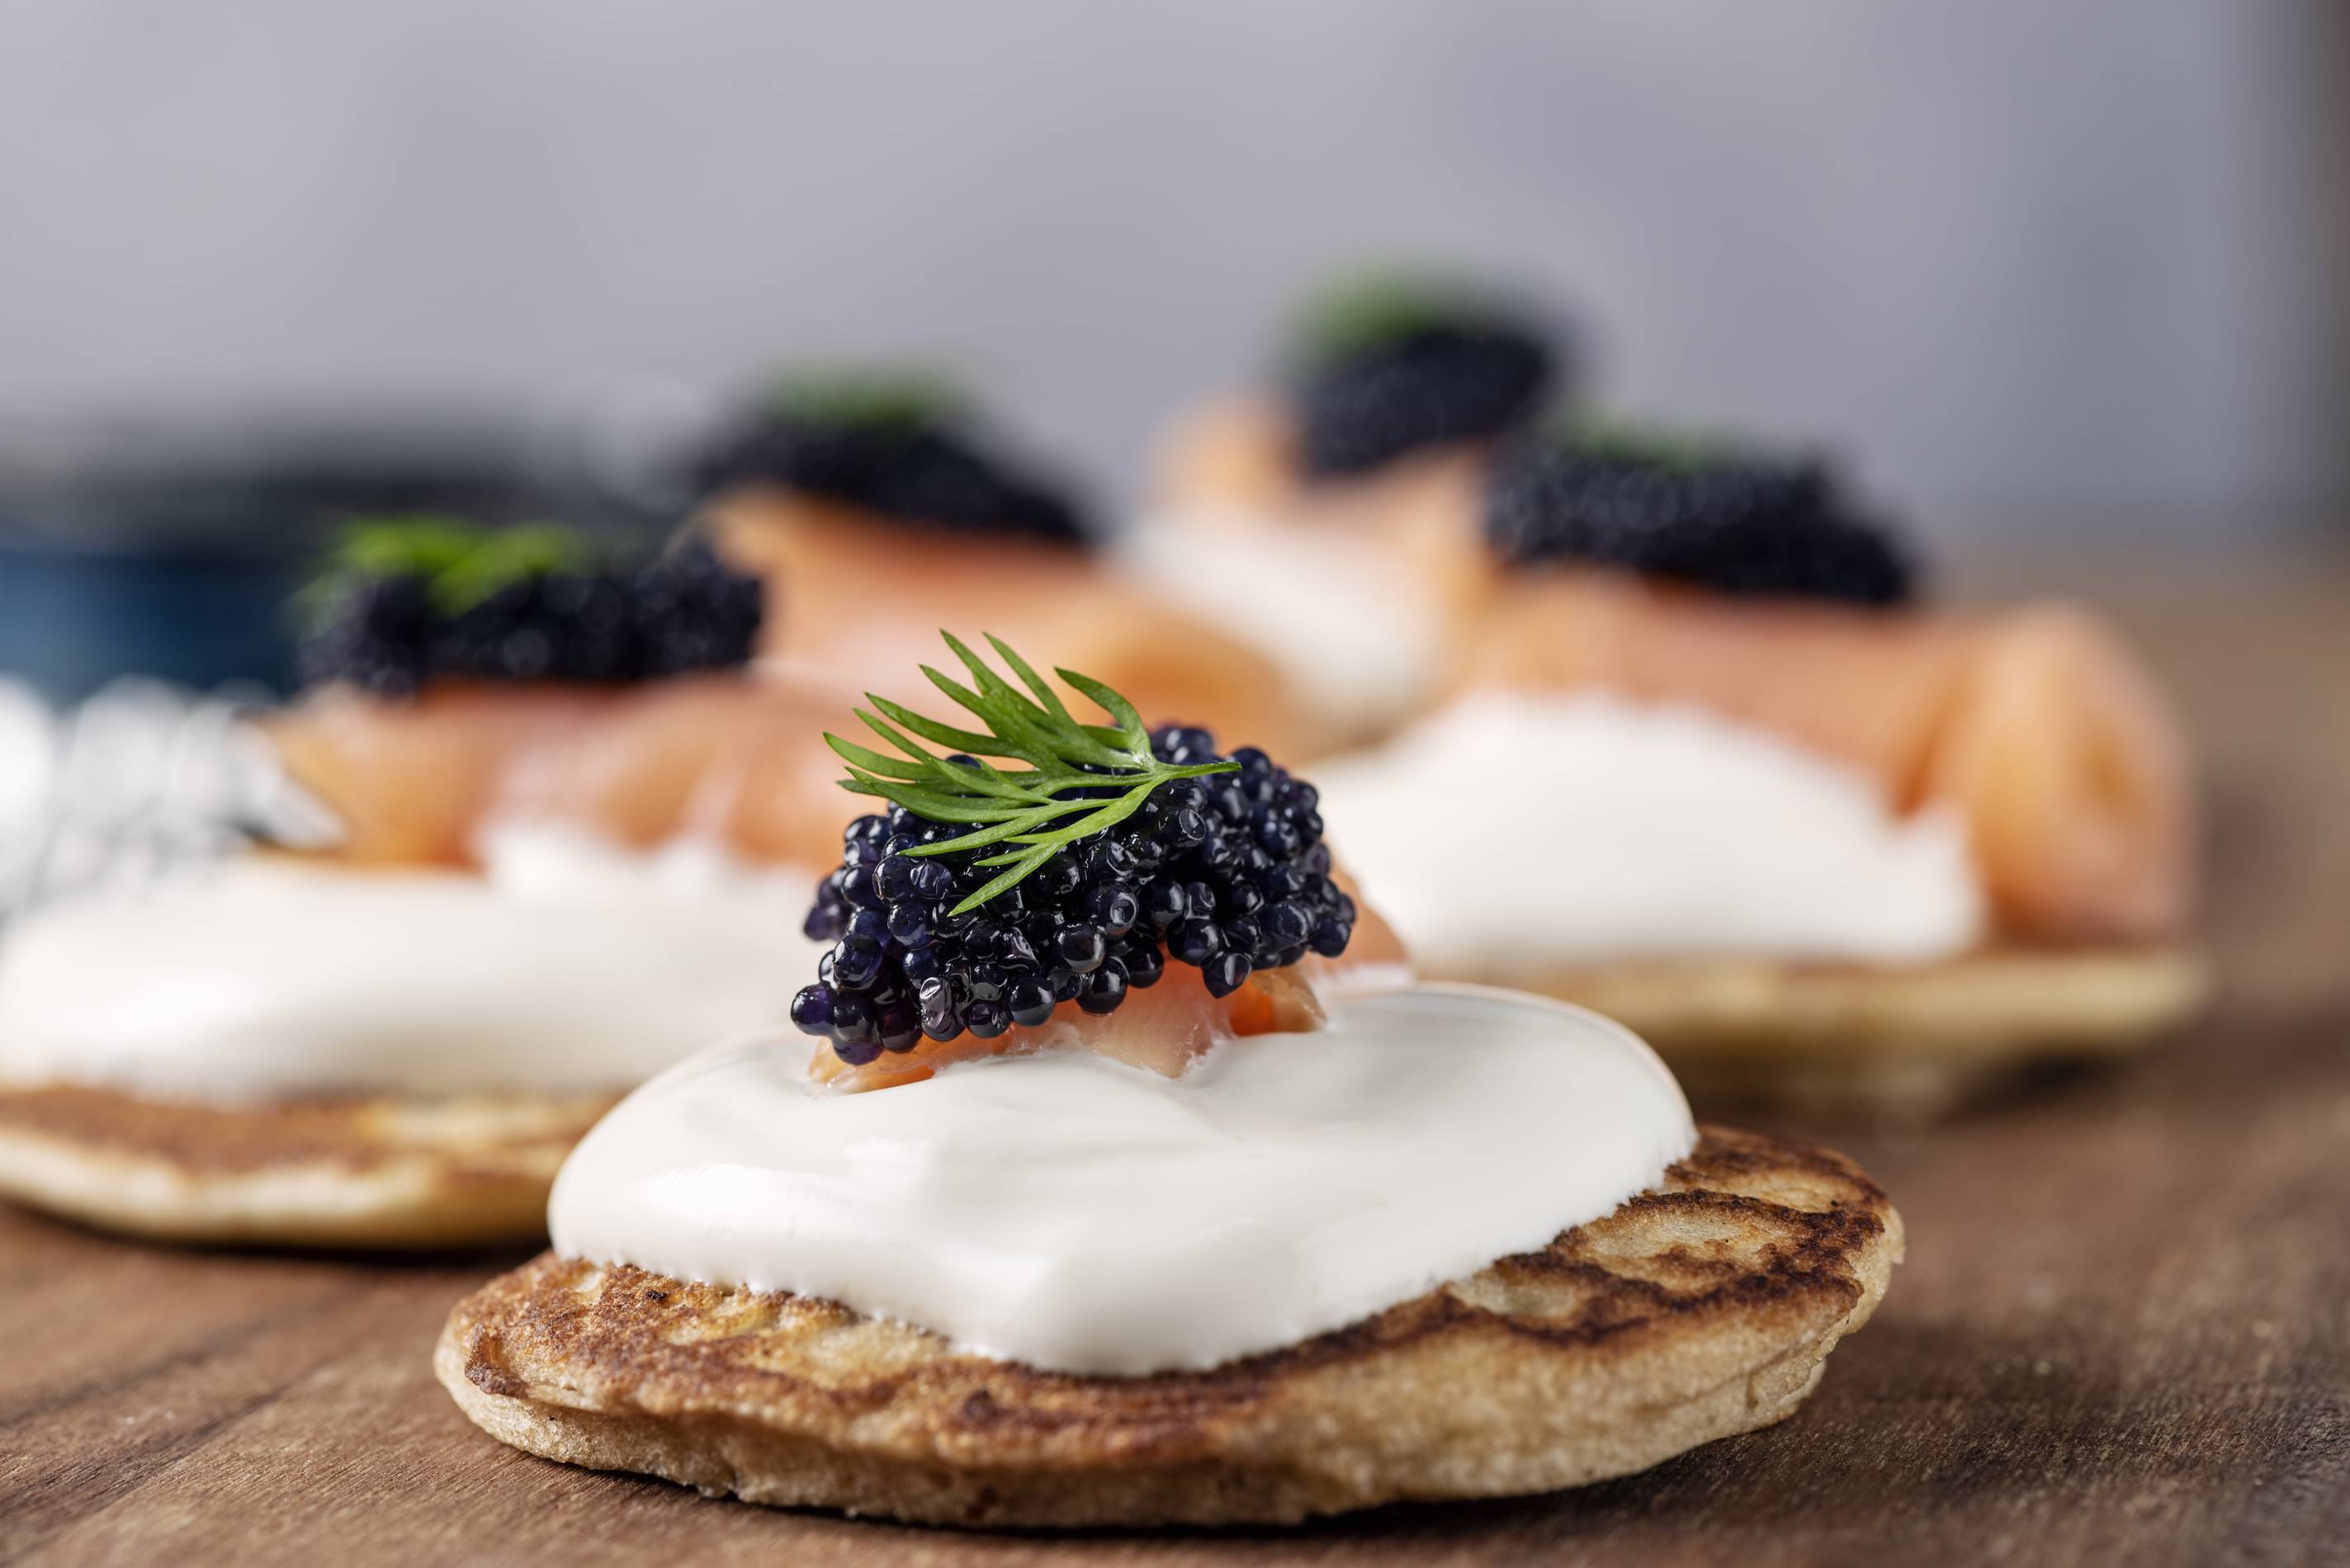 caviar-chi-credit-clarkandcompany-getty-images.jpg